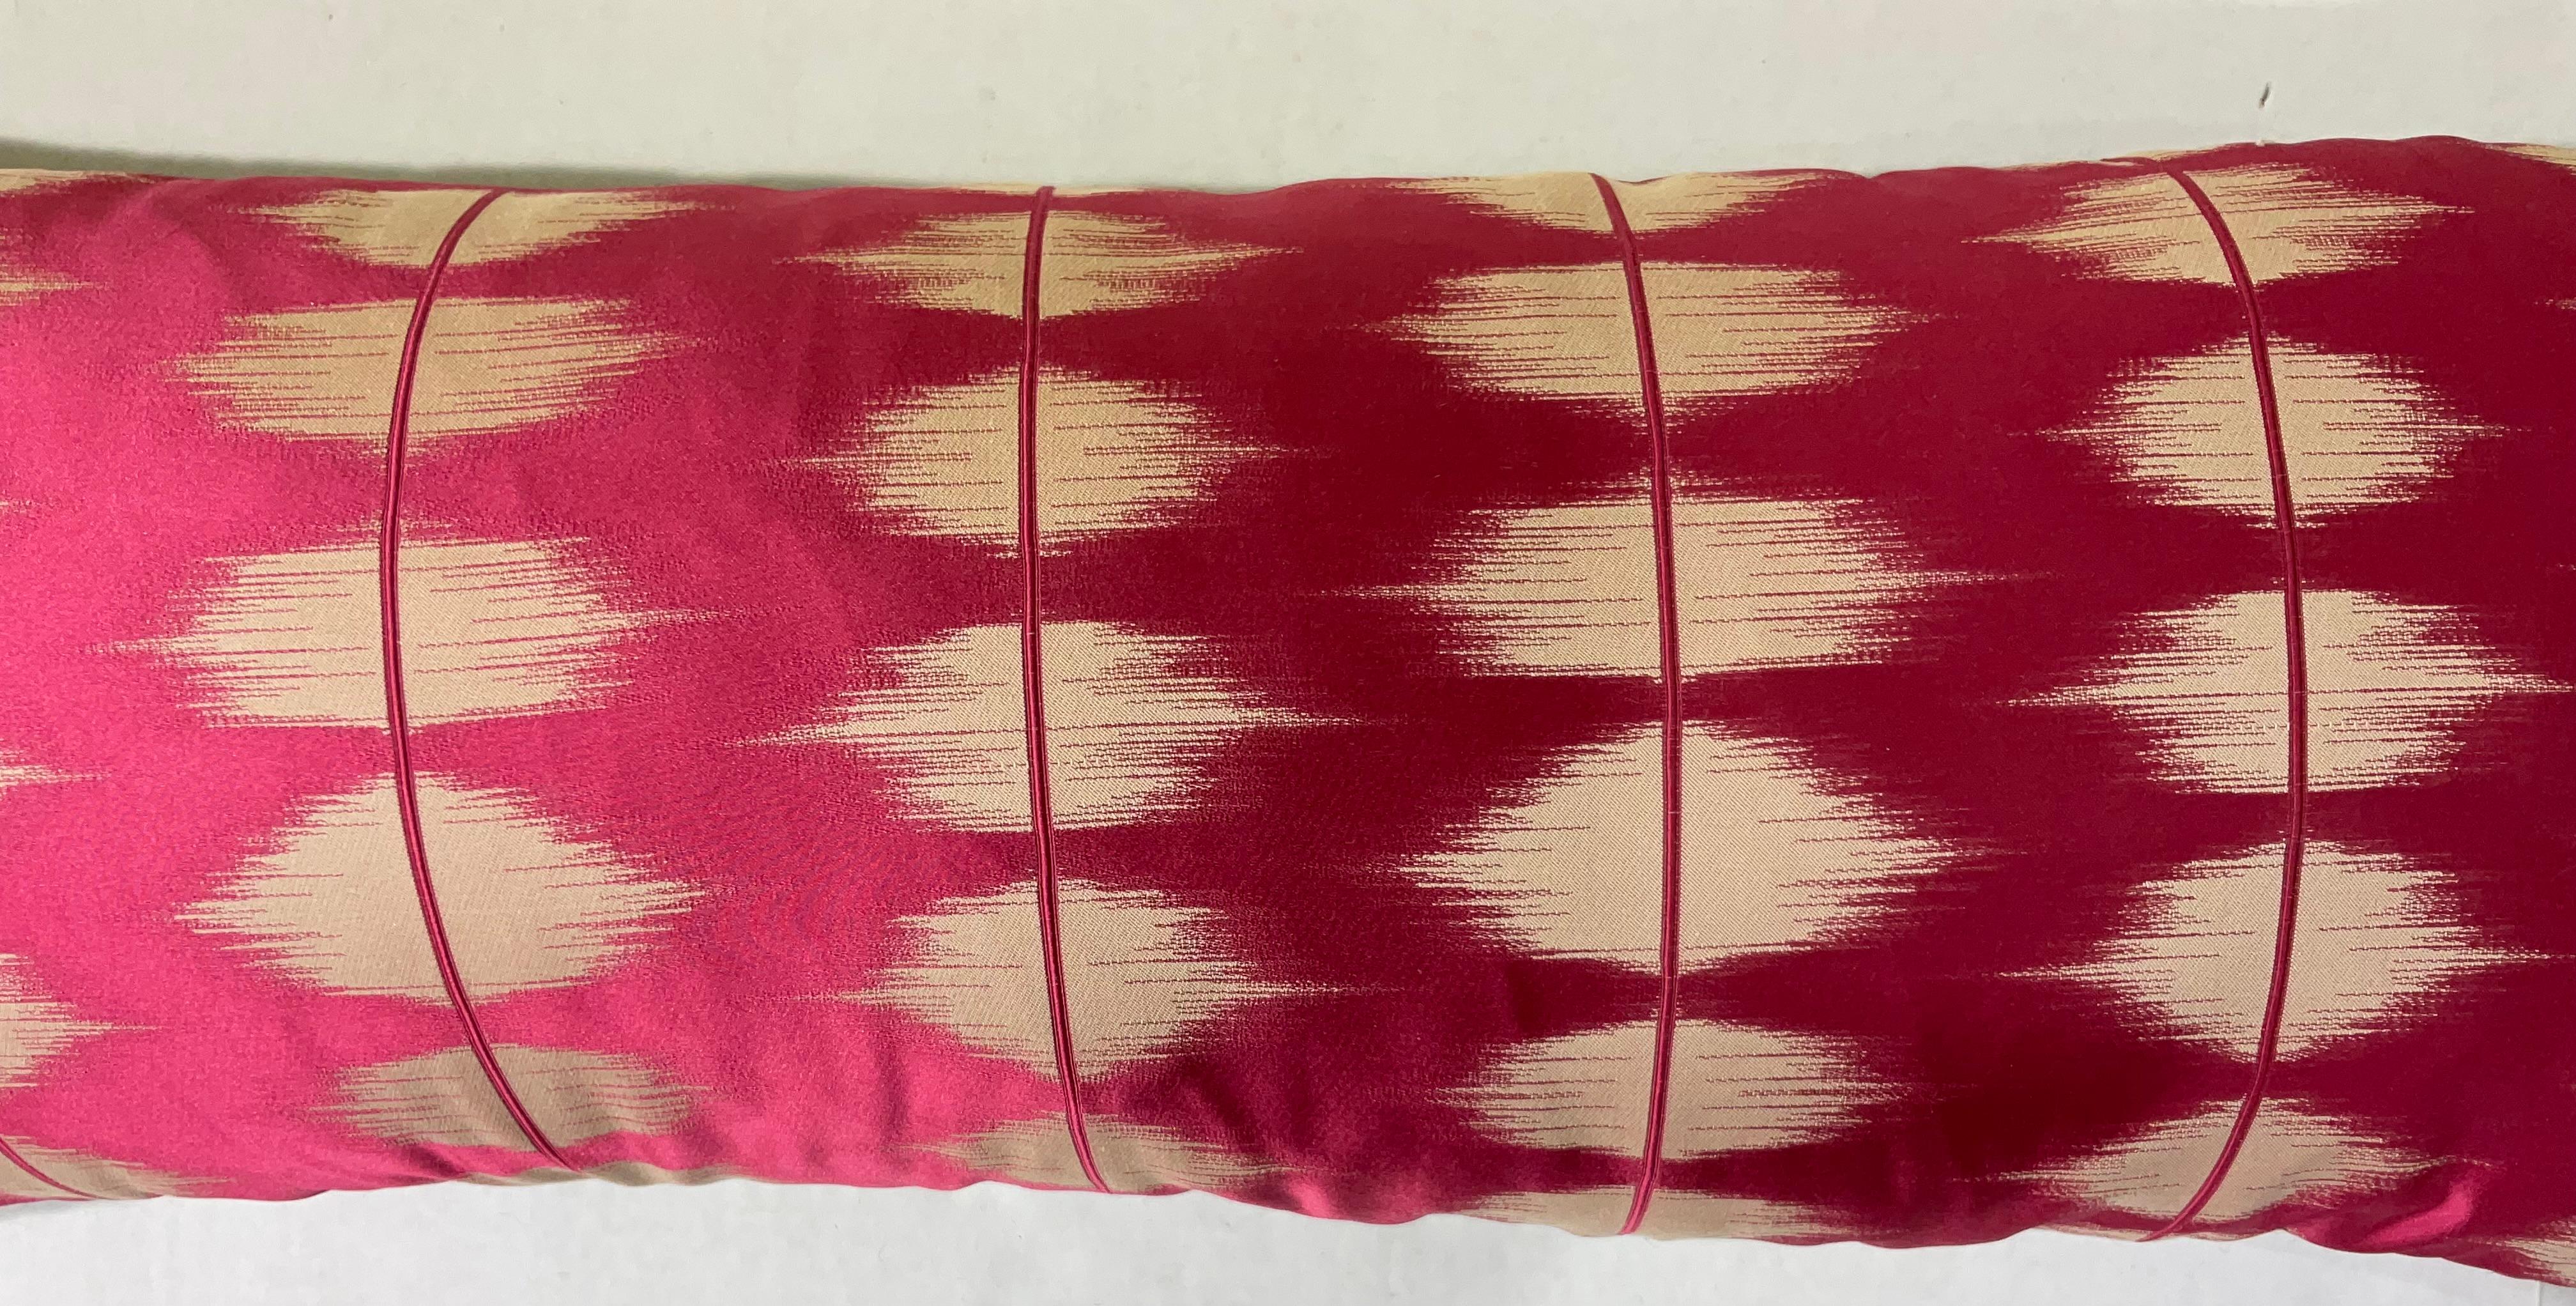 Flat-Weave Geometric Motif Kilim Rug Fragment Pillow For Sale 3